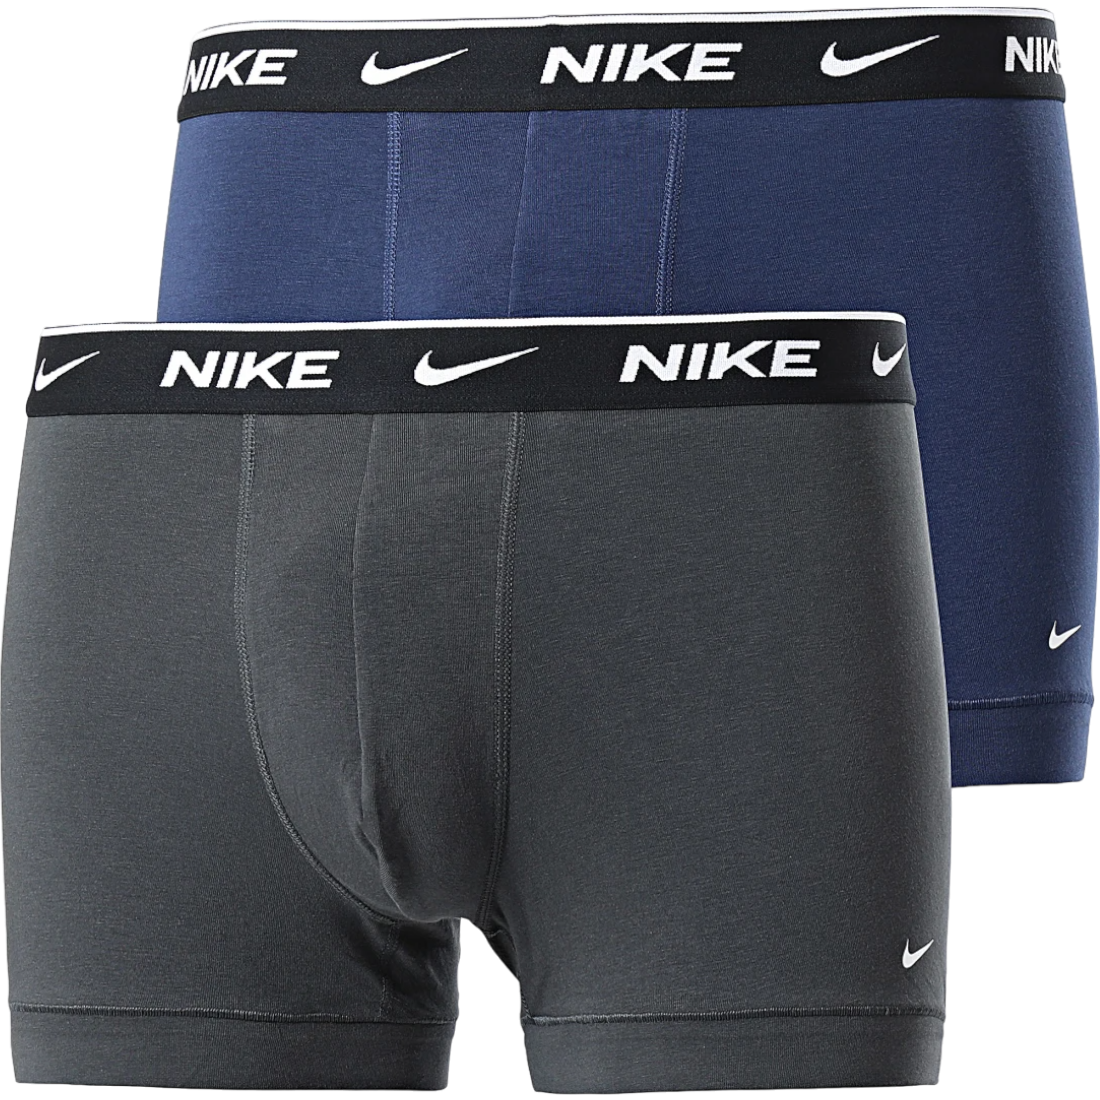 Bokserki Nike Cotton Trunk 2 pcs